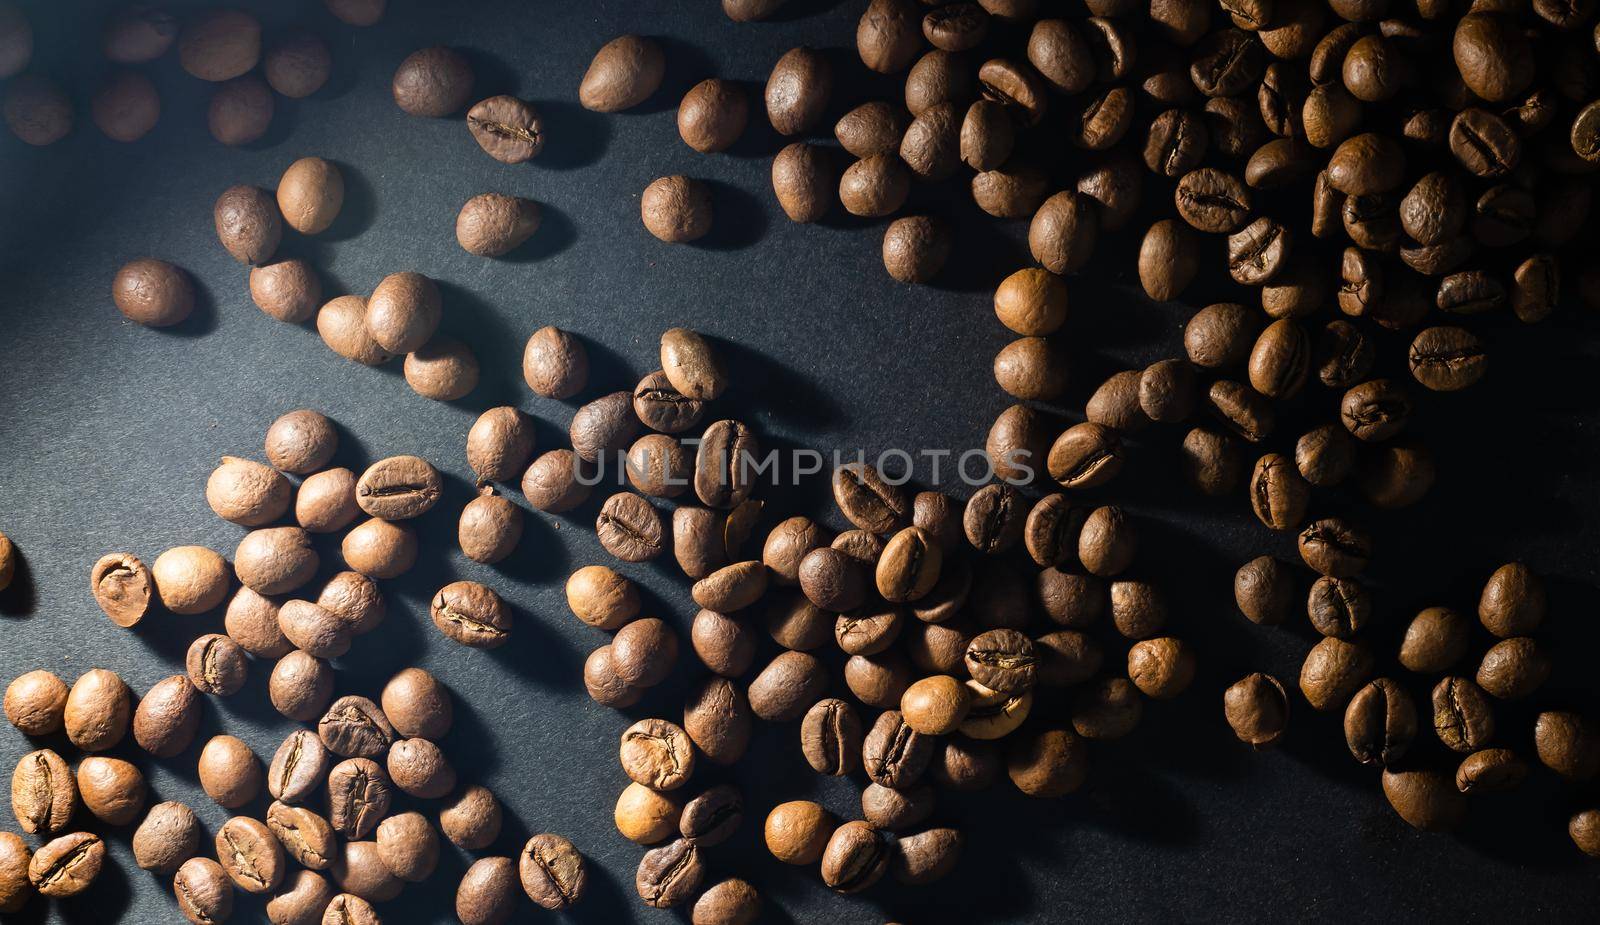 Flying coffee beans over dark.